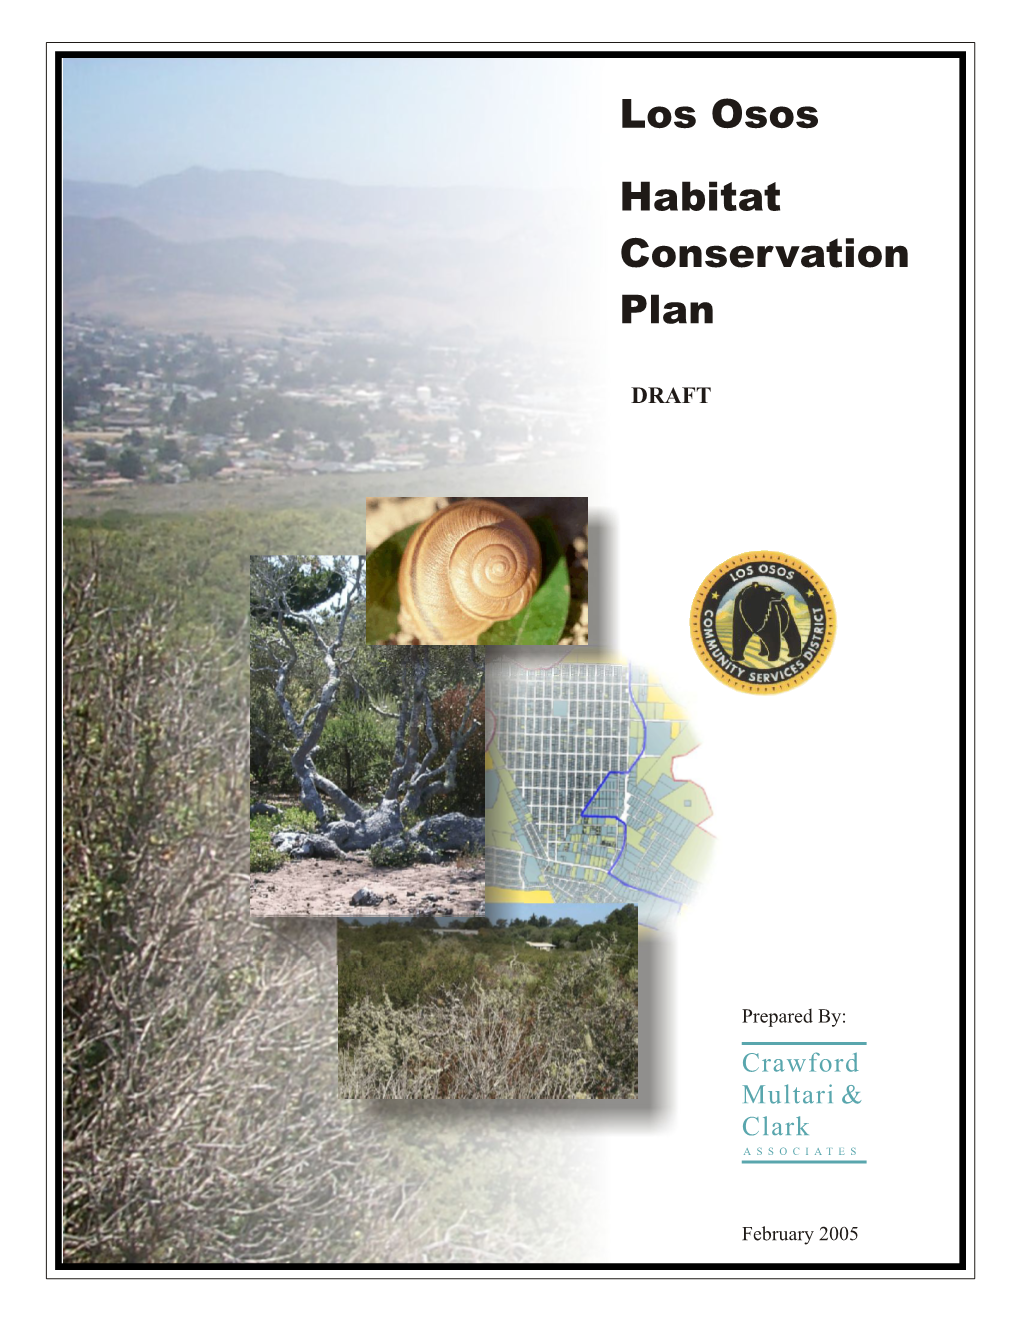 Los Osos Habitat Conservation Plan